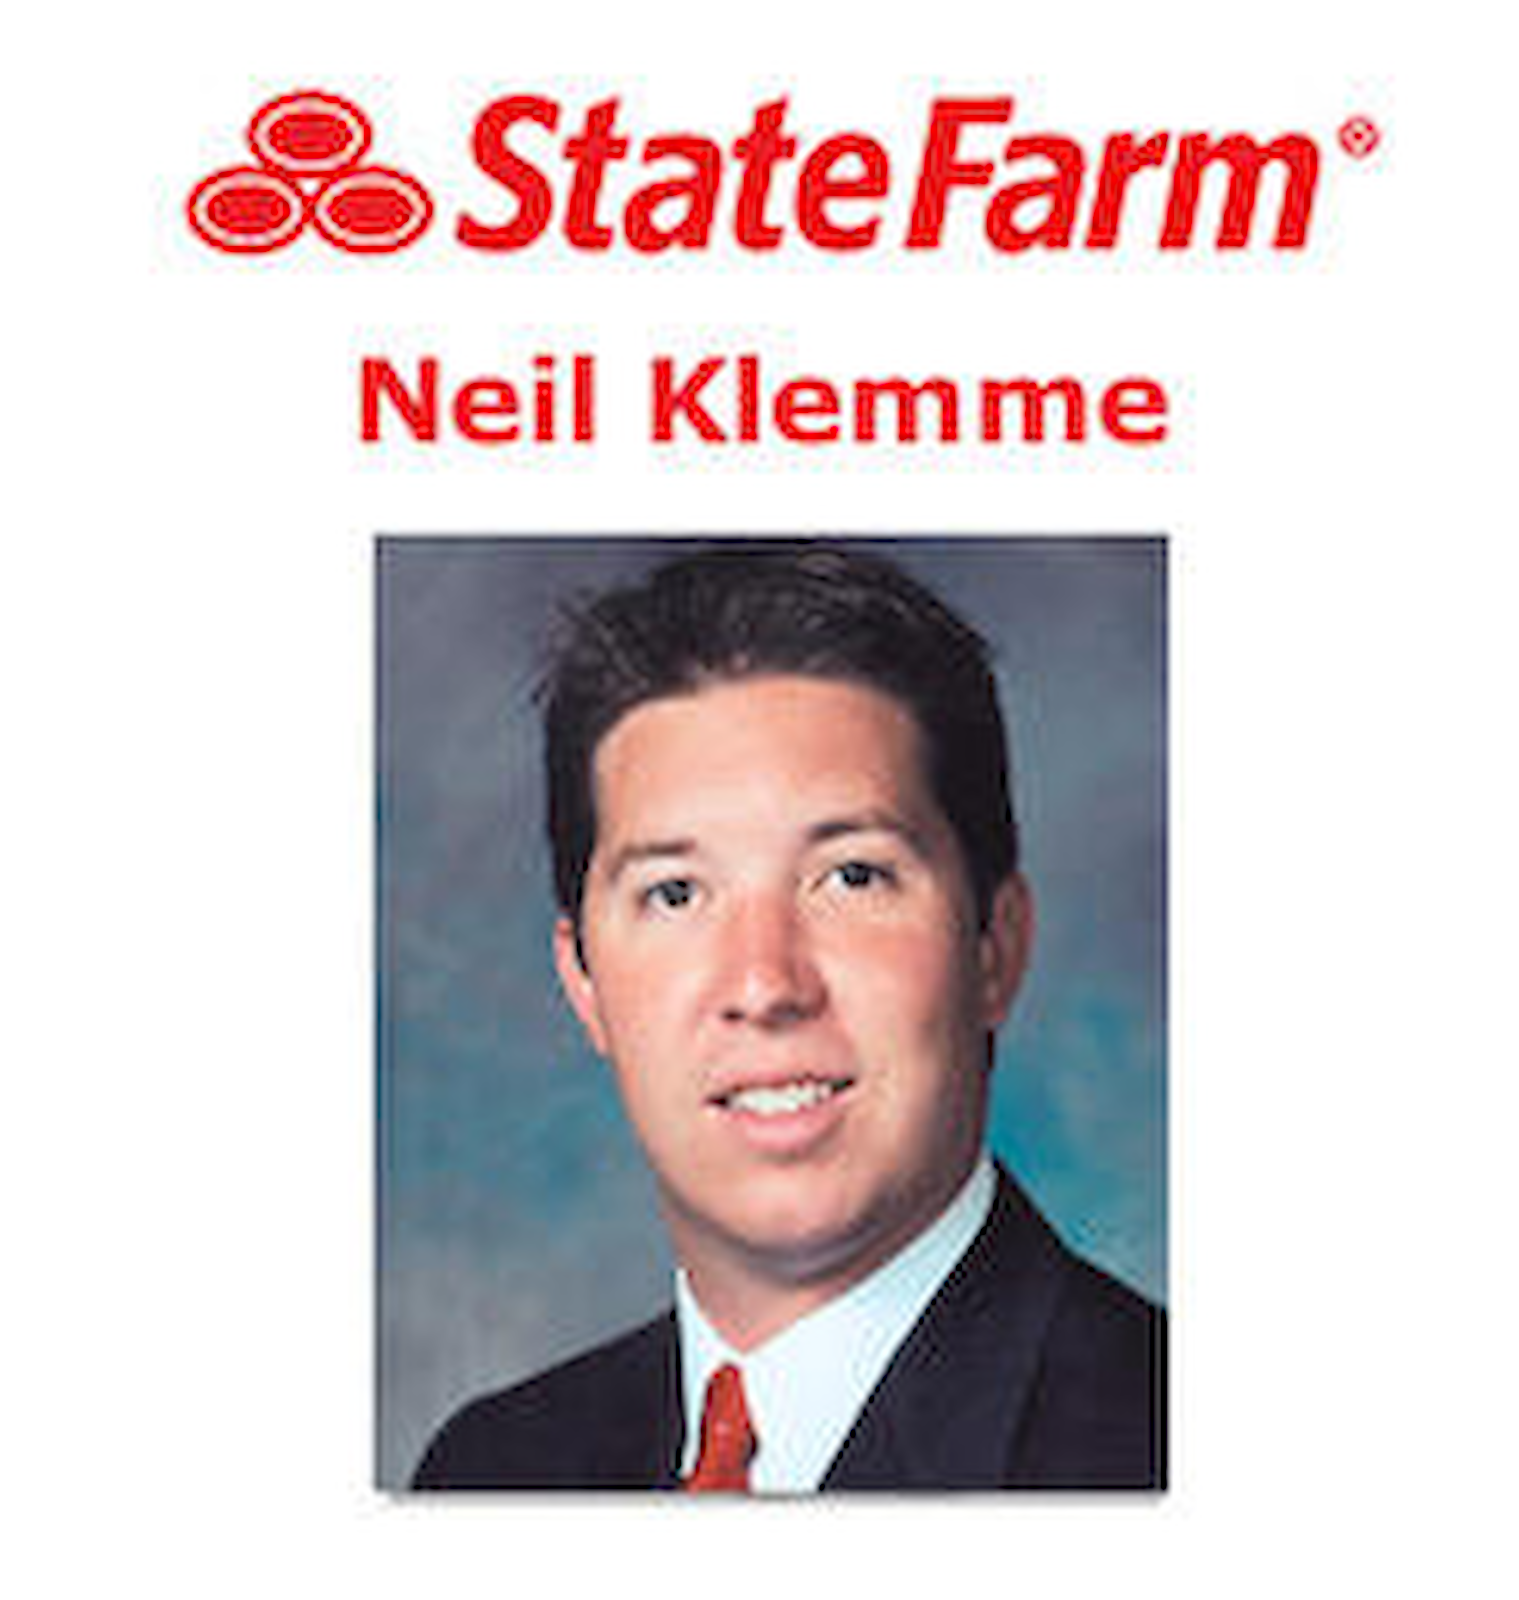 Neil Klemme - State Farm Insurance